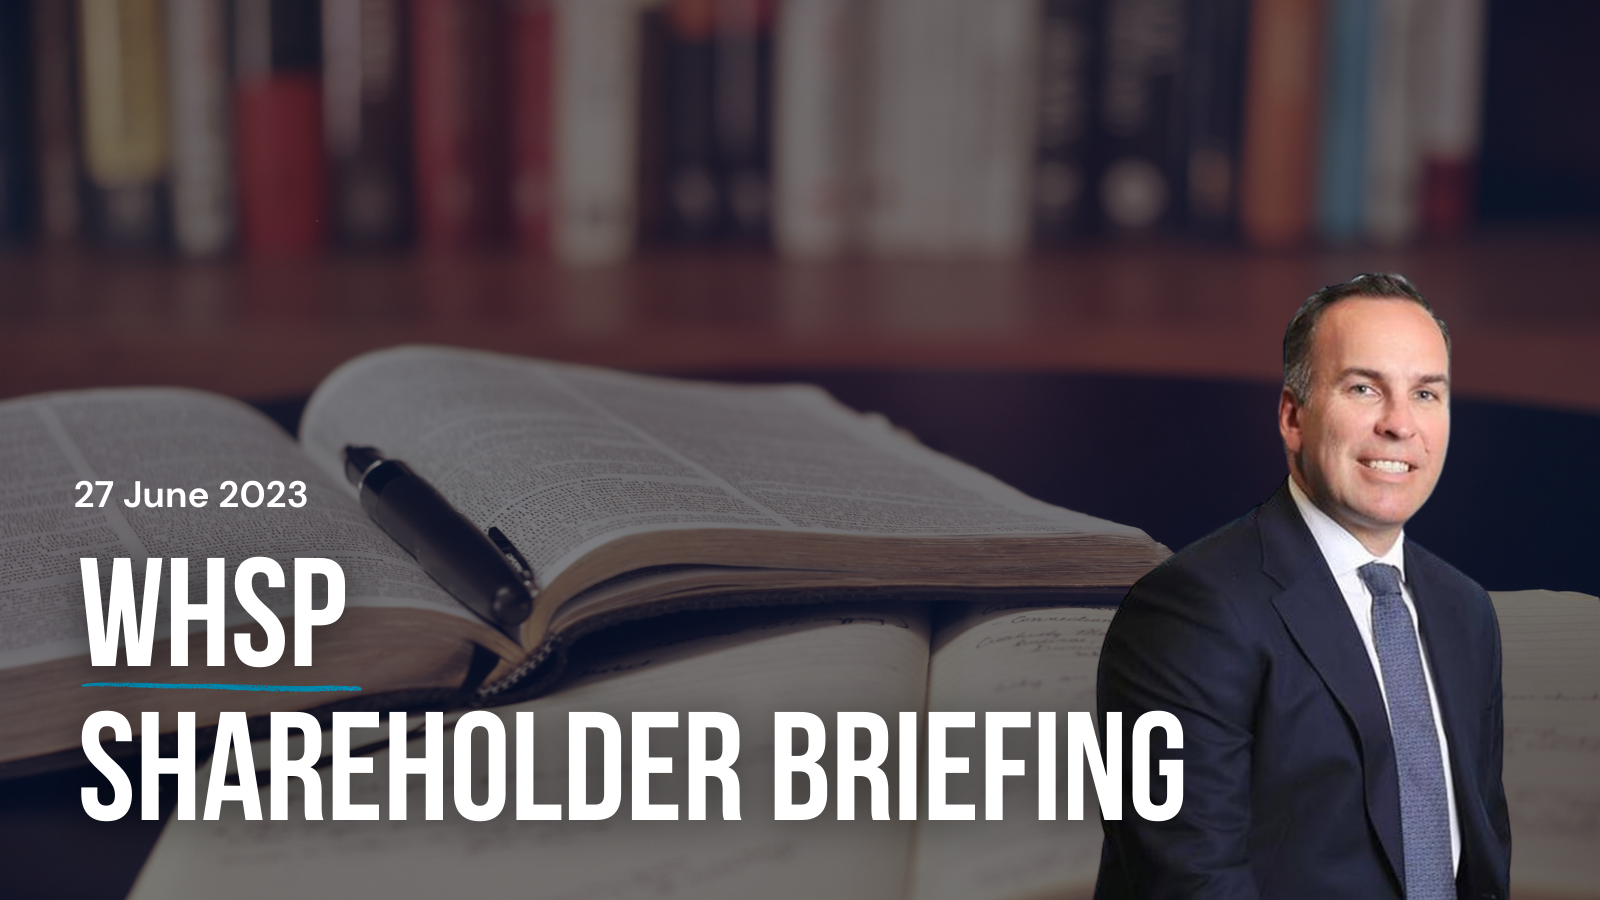 8. WHSP shareholder briefing